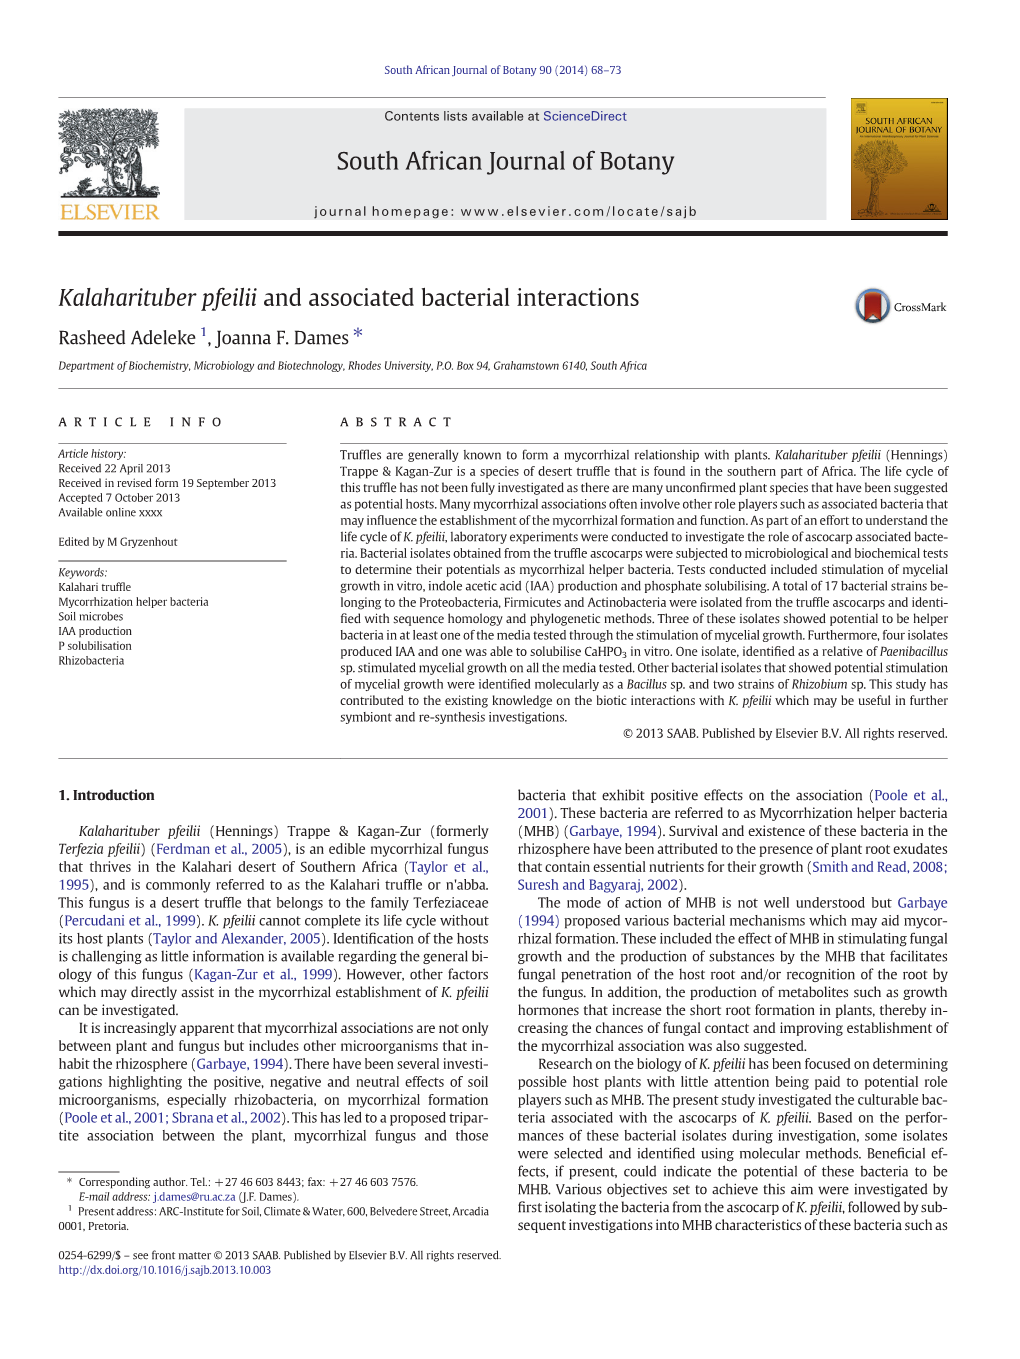 Kalaharituber Pfeilii and Associated Bacterial Interactions